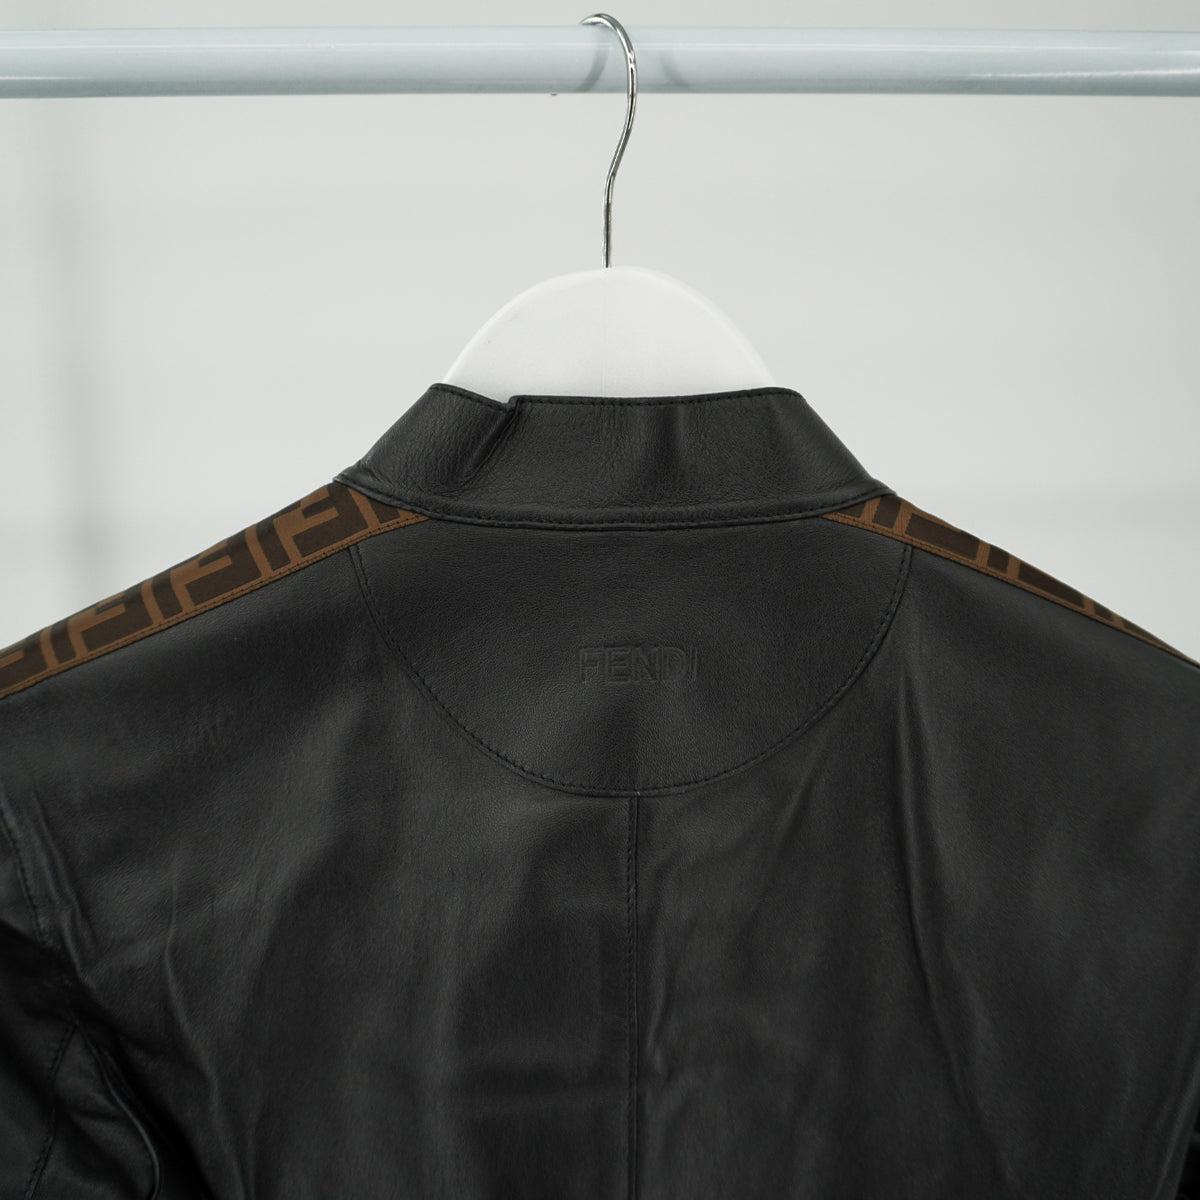 Fendi Jacket Lamb Leather in Fogme Black - Size 42/16